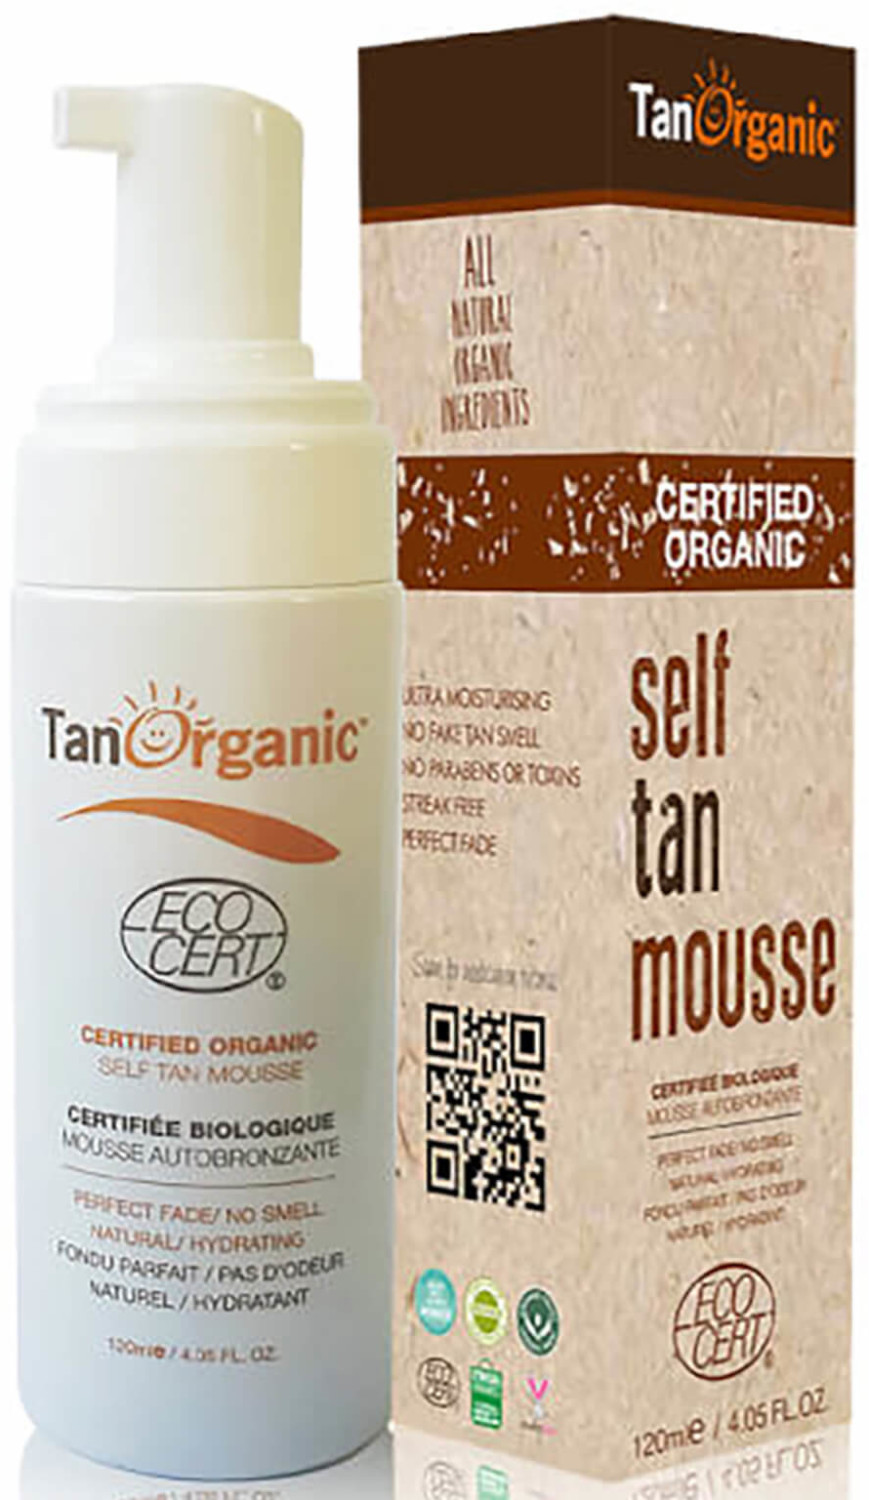 Photos - Sun Skin Care TanOrganic TanOrganic Self Tan Mousse (120 ml)